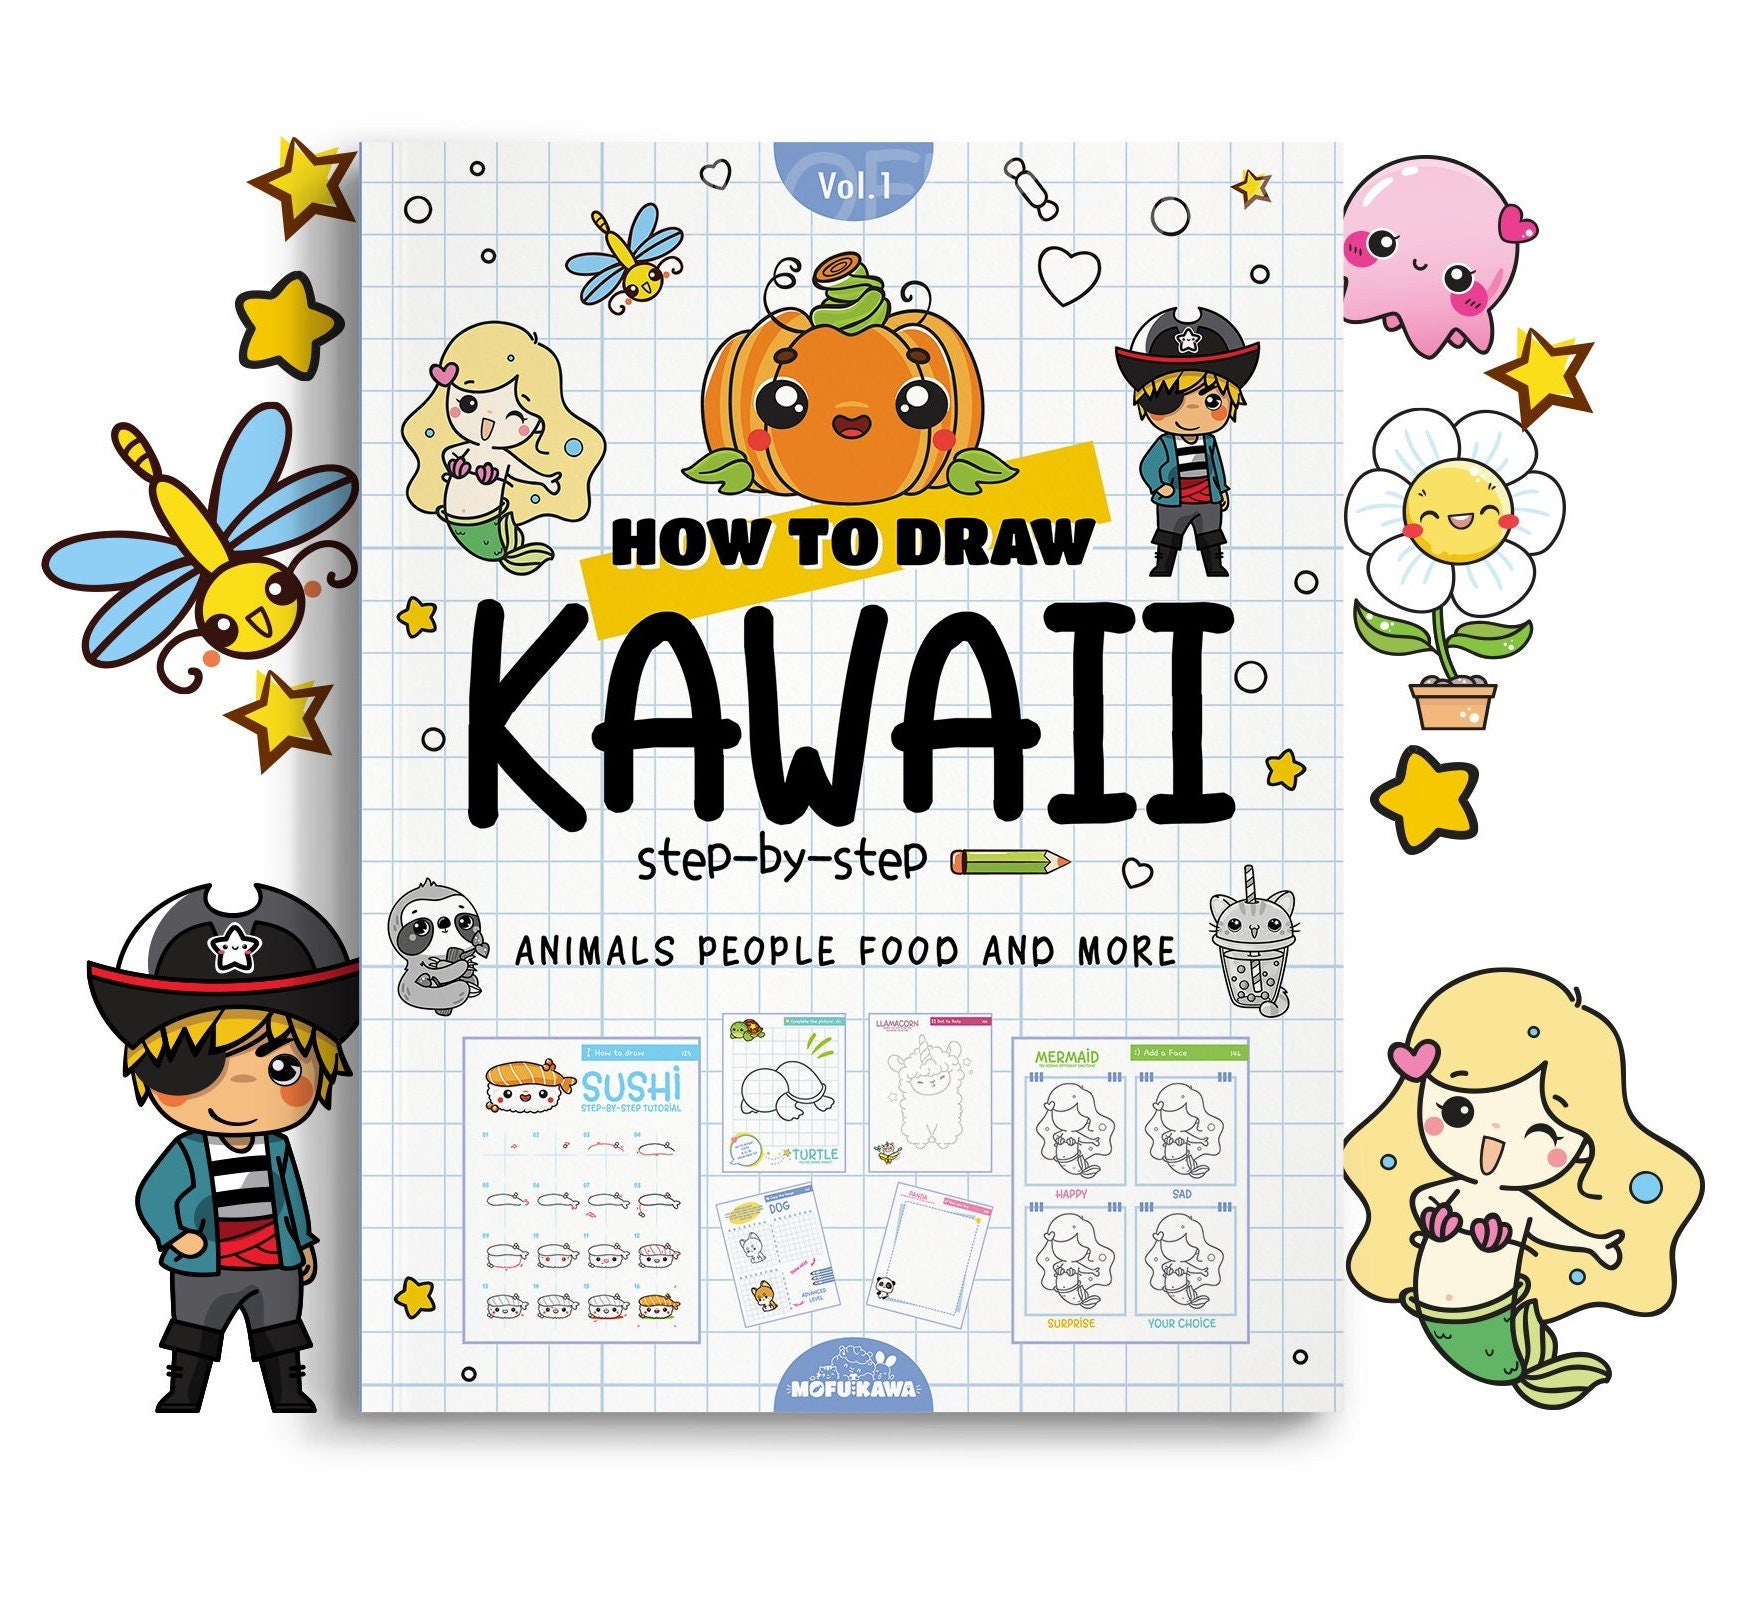 Drawing Manga / Como dibujar manga japonesa: A Complete Drawing Kit for  Beginners / Un kit completo para principiantes - Lee, Jeannie:  9781600582868 - AbeBooks